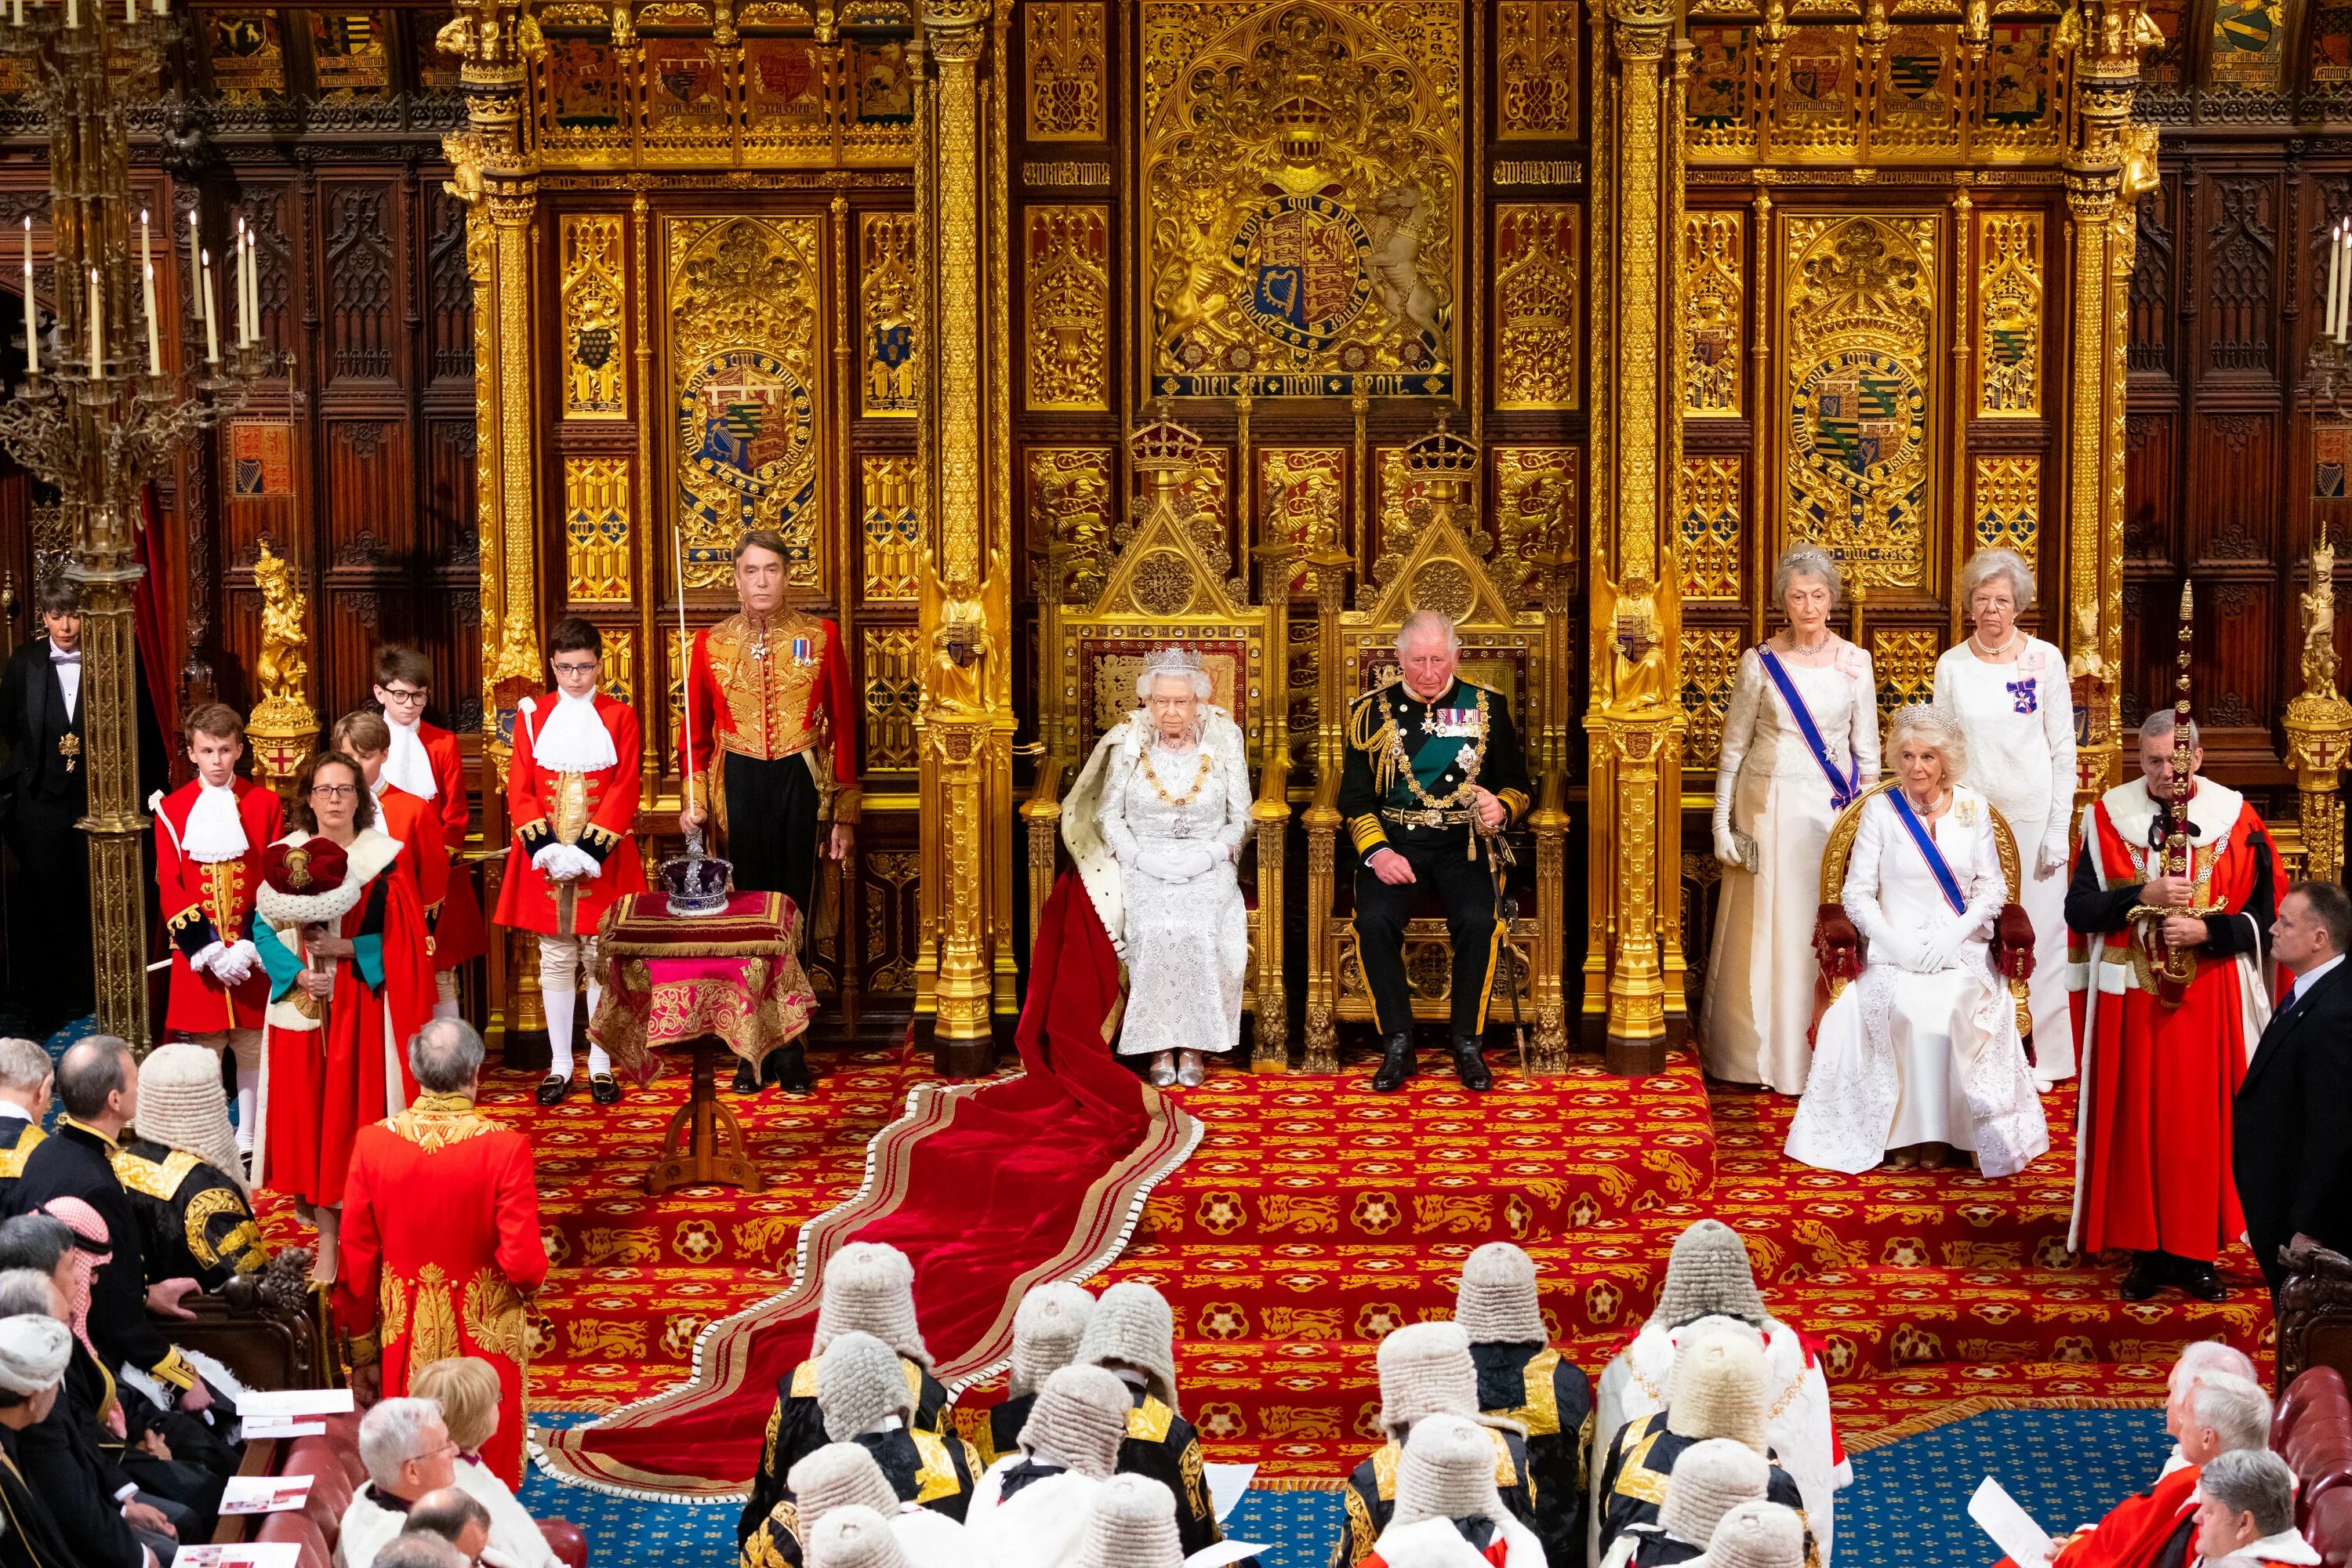 The State Opening of Parliament Великобритании. Королевская монархия Великобритании.